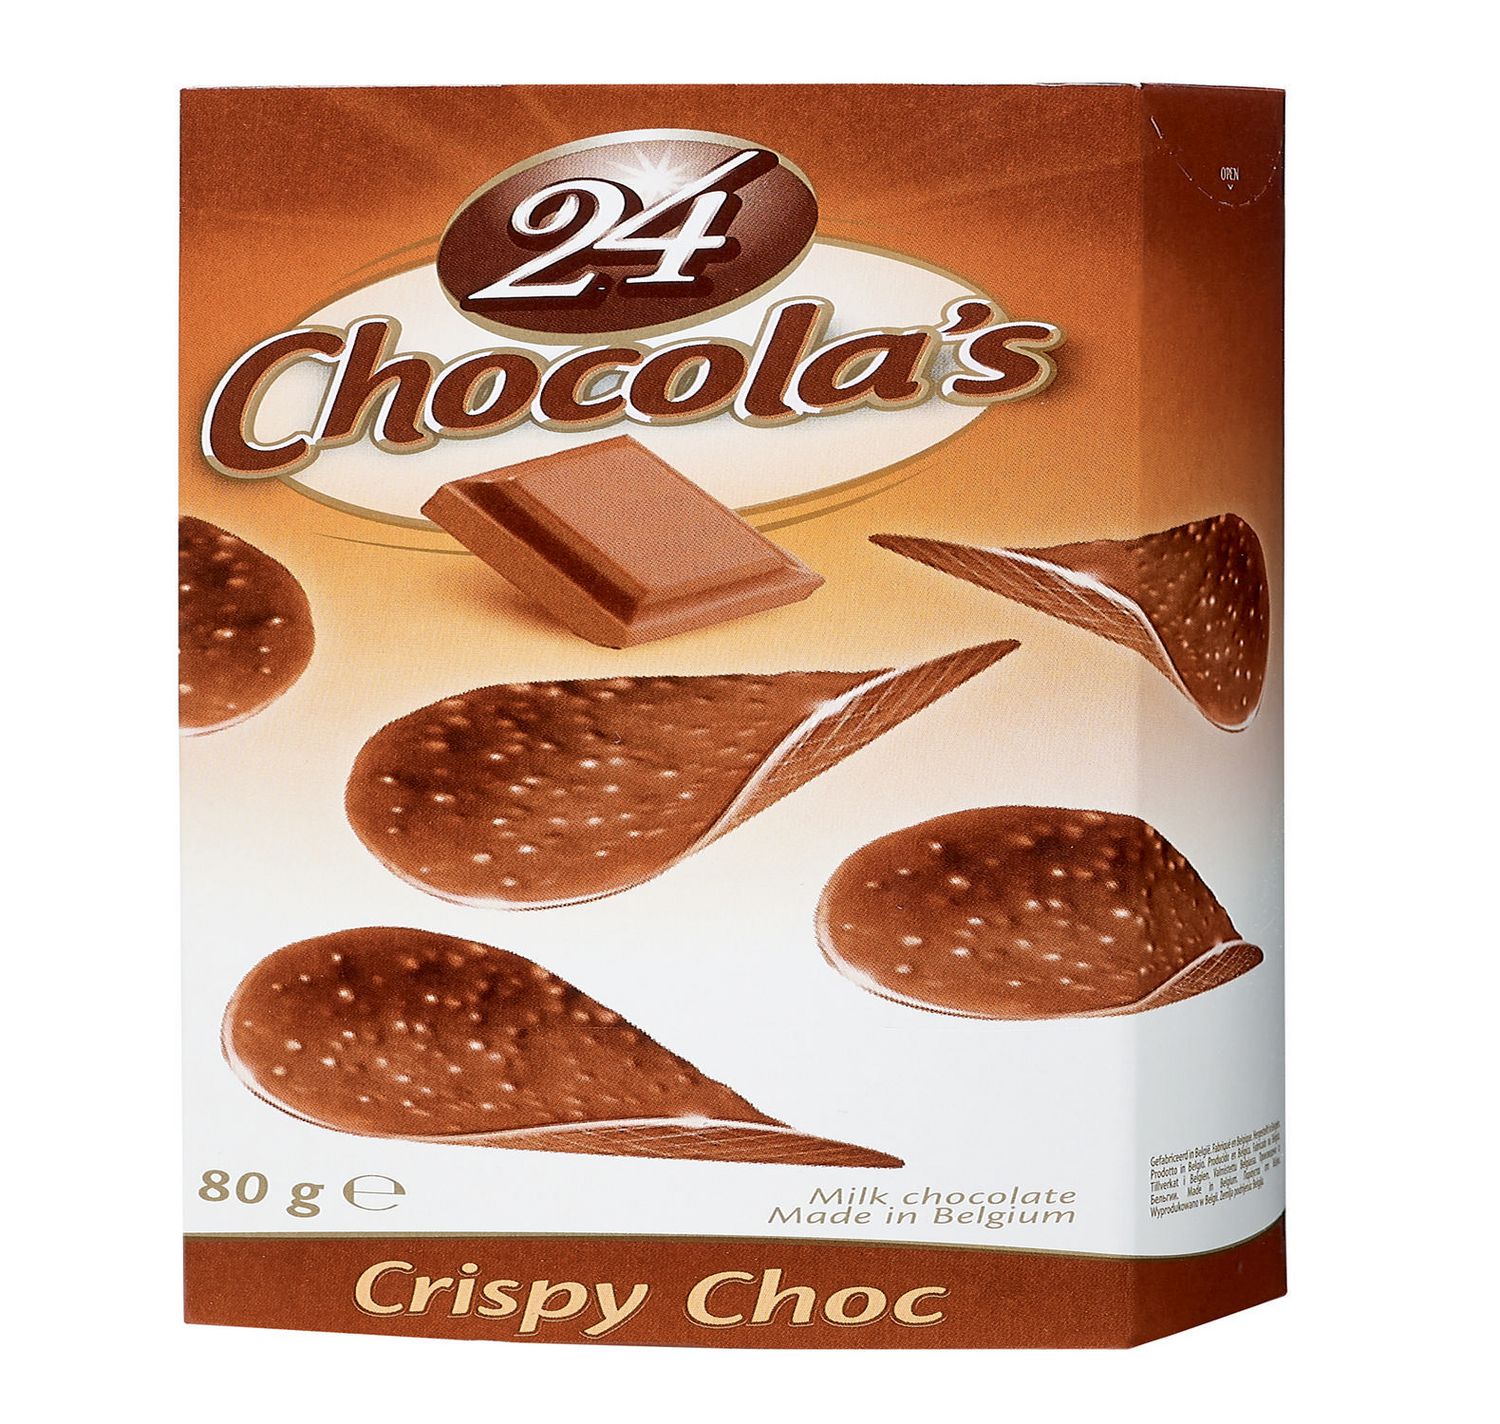 Hamlet 24 Chocola's Crispy Choc Milk Chocolate - Walmart.ca